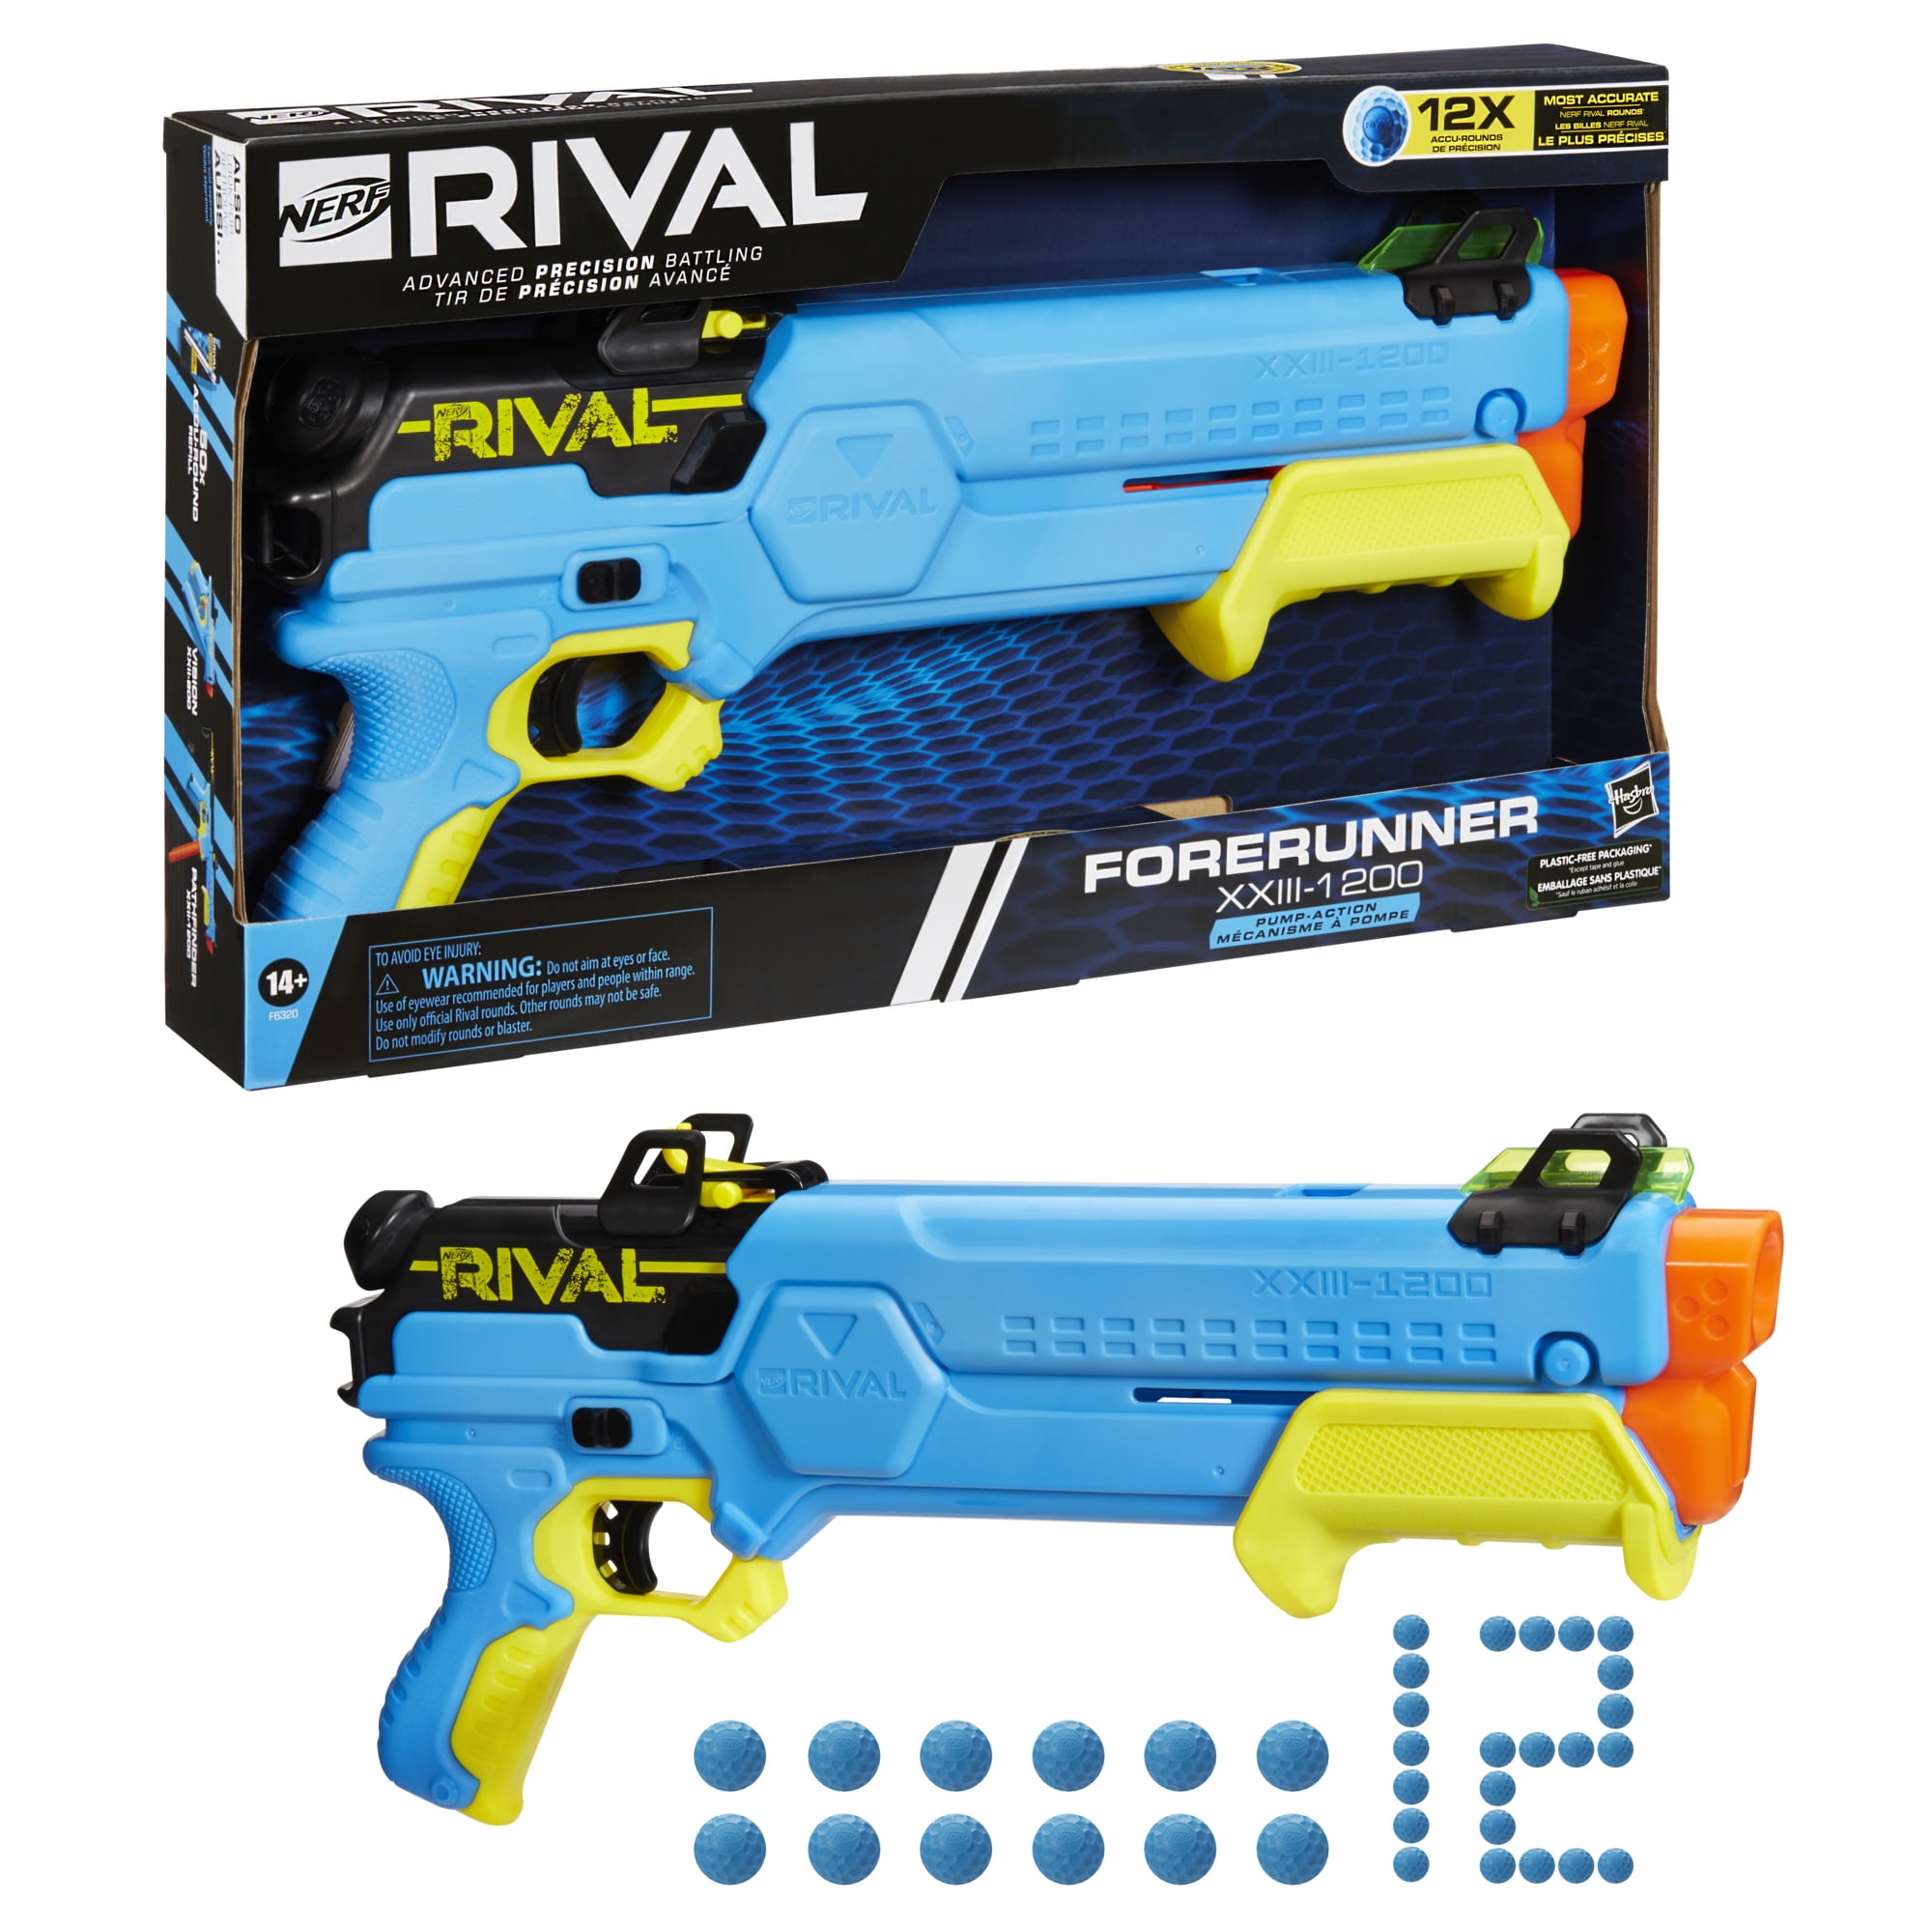 Nerf Rival XXIII-1200 Nerf Blaster, 12 Capacity, 12 Nerf Rival Accu-Rounds, Adjustable Sight - Walmart.com